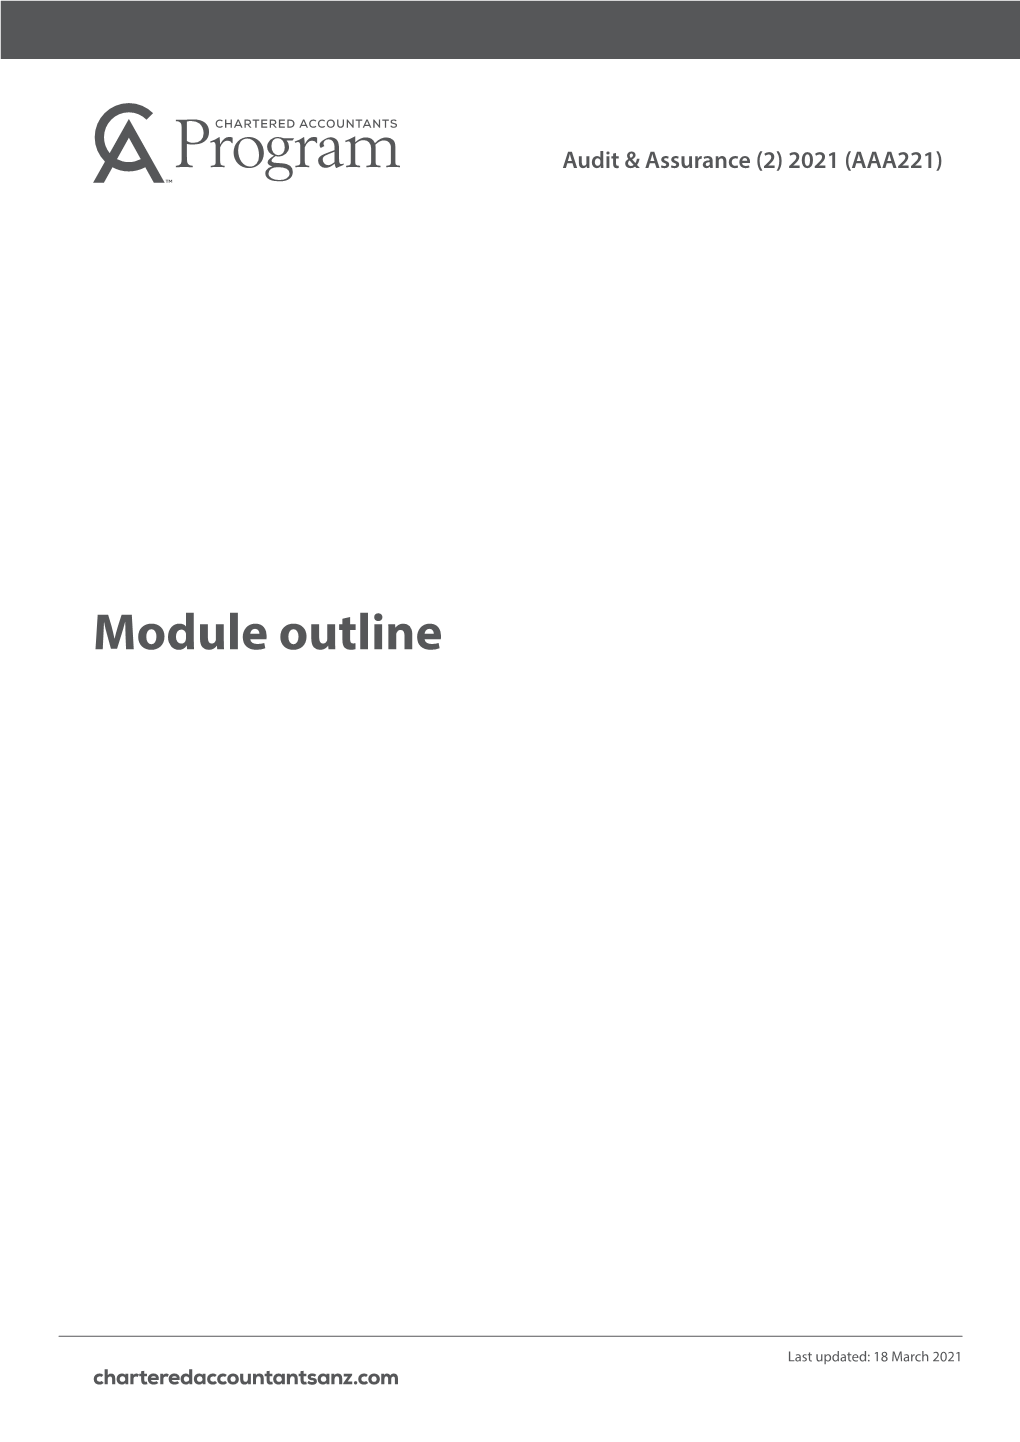 Module Outline